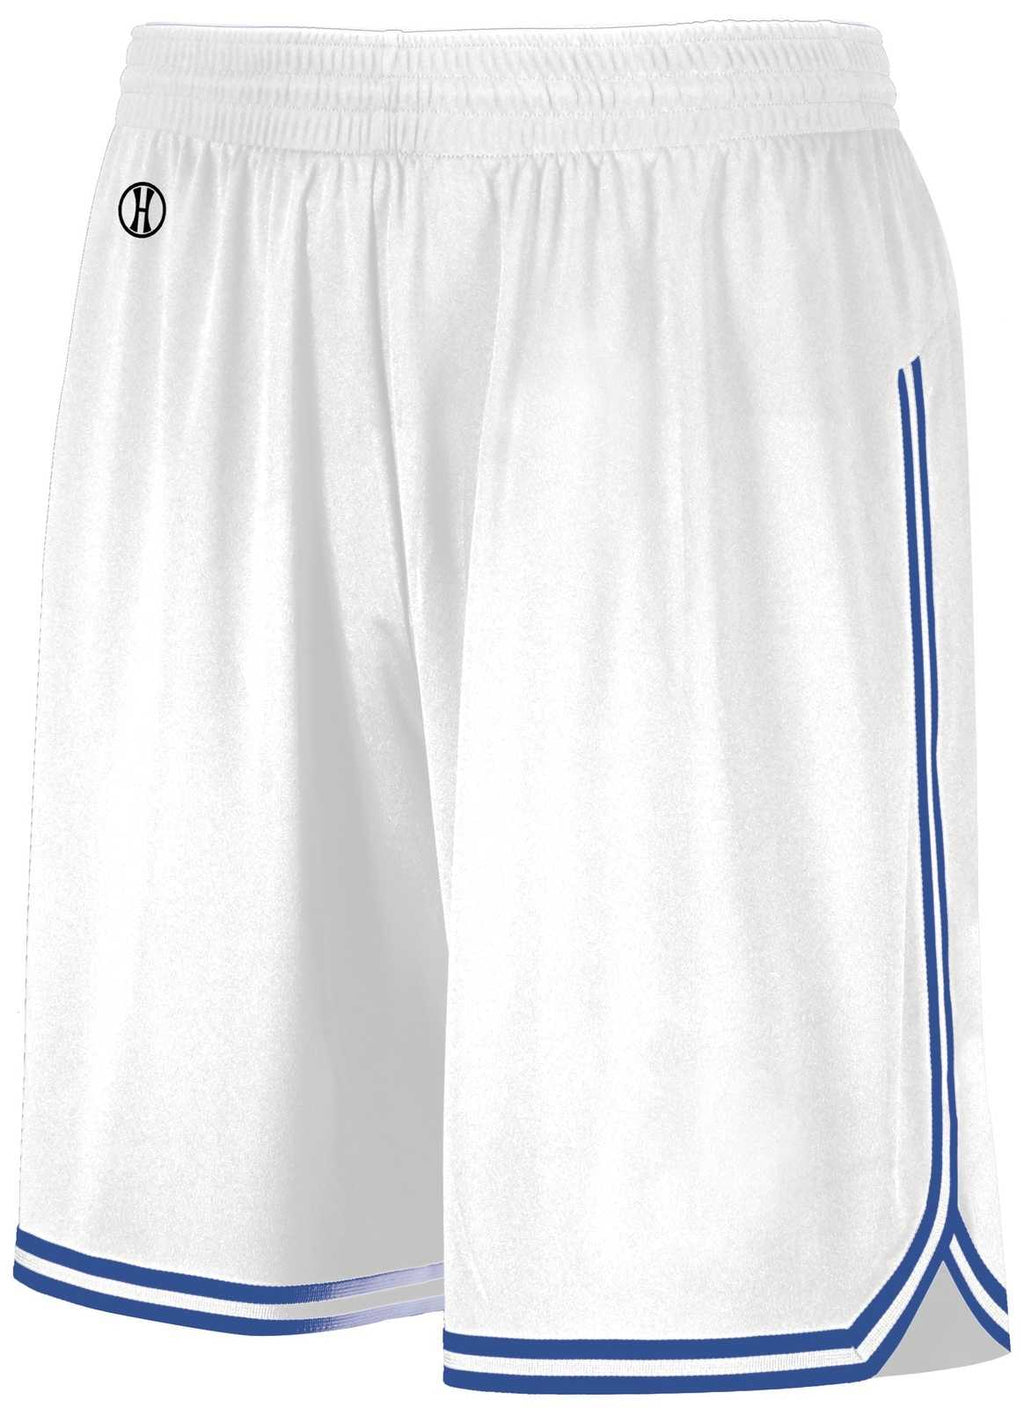 Holloway 224077 Retro Basketball Shorts - White Royal